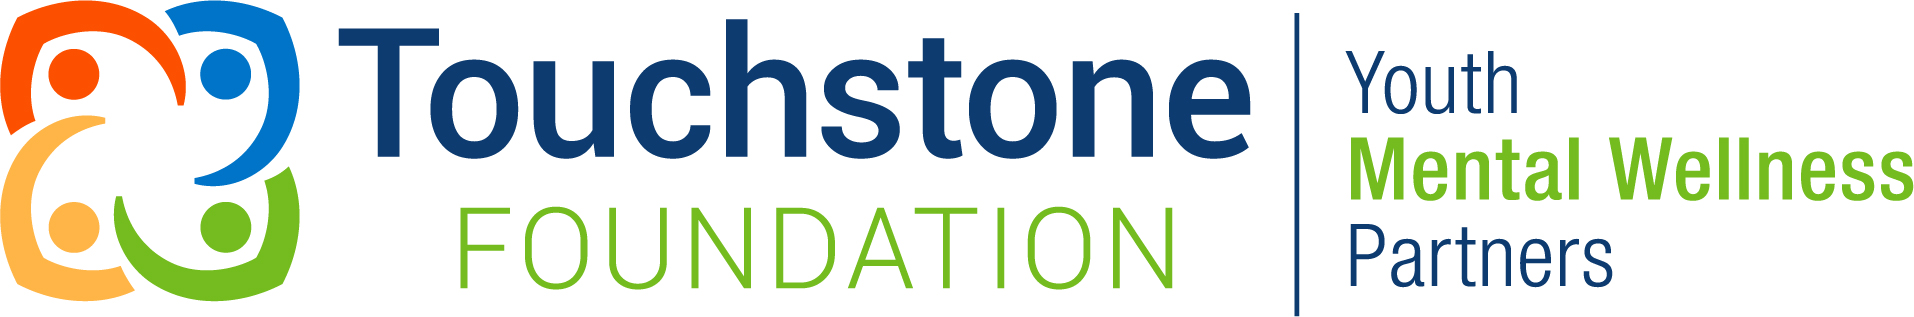 Touchstone Foundation